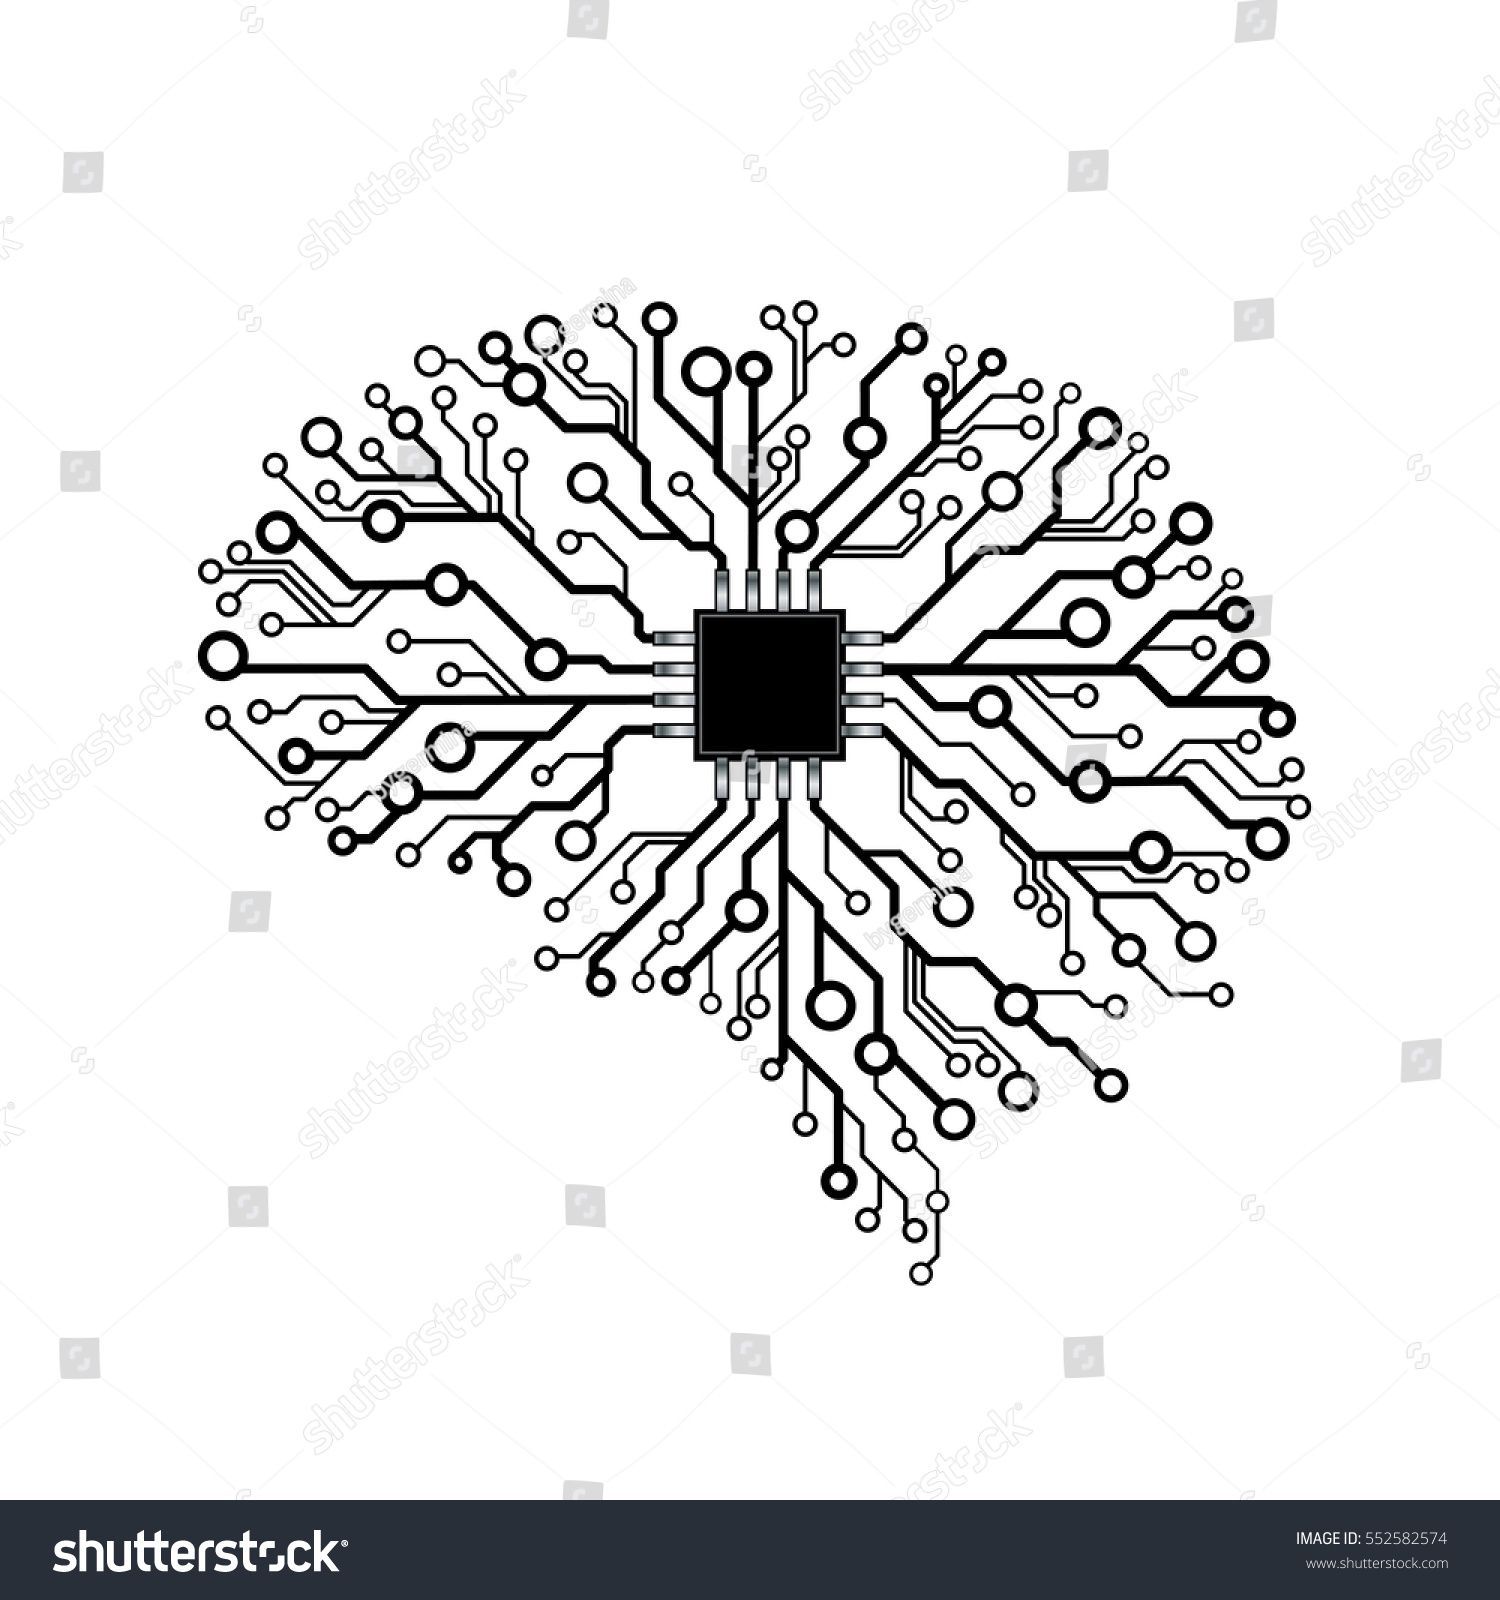 Vector Printed Circuit Board Human Brain Concept Illustration Of